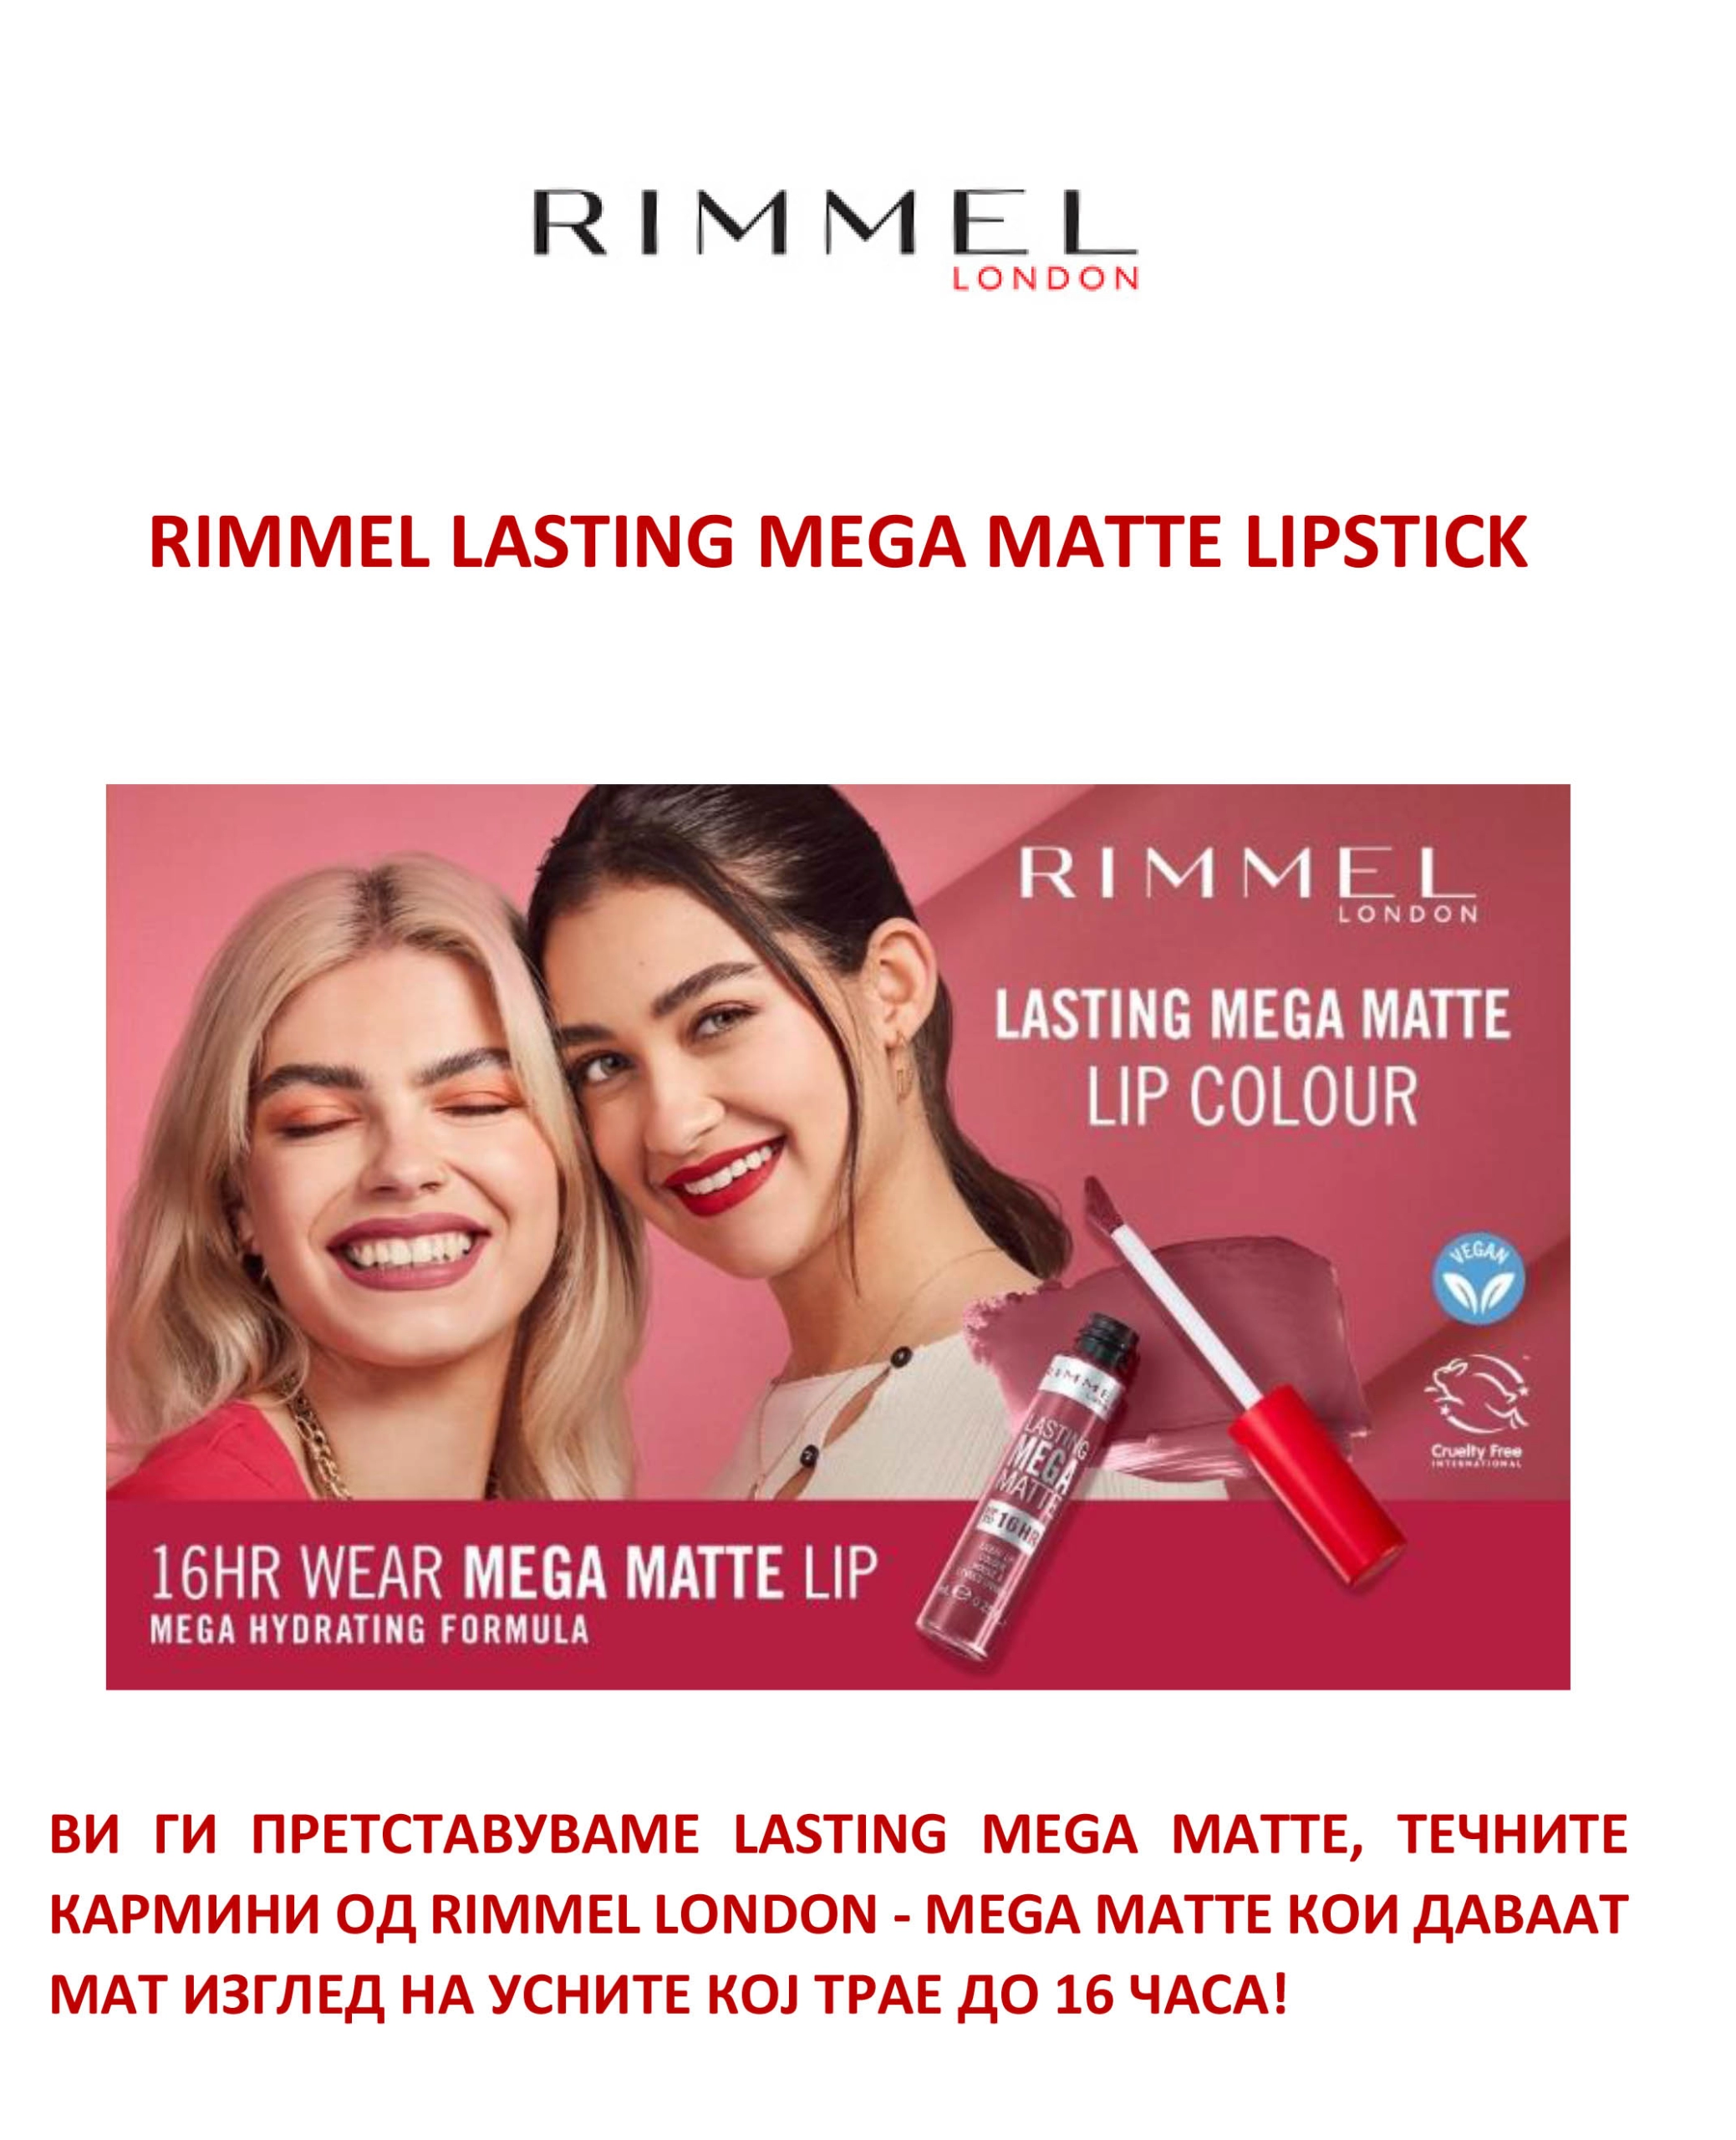 Rimmel Lasting Mega Matte Lipstick Blog 1 scaled